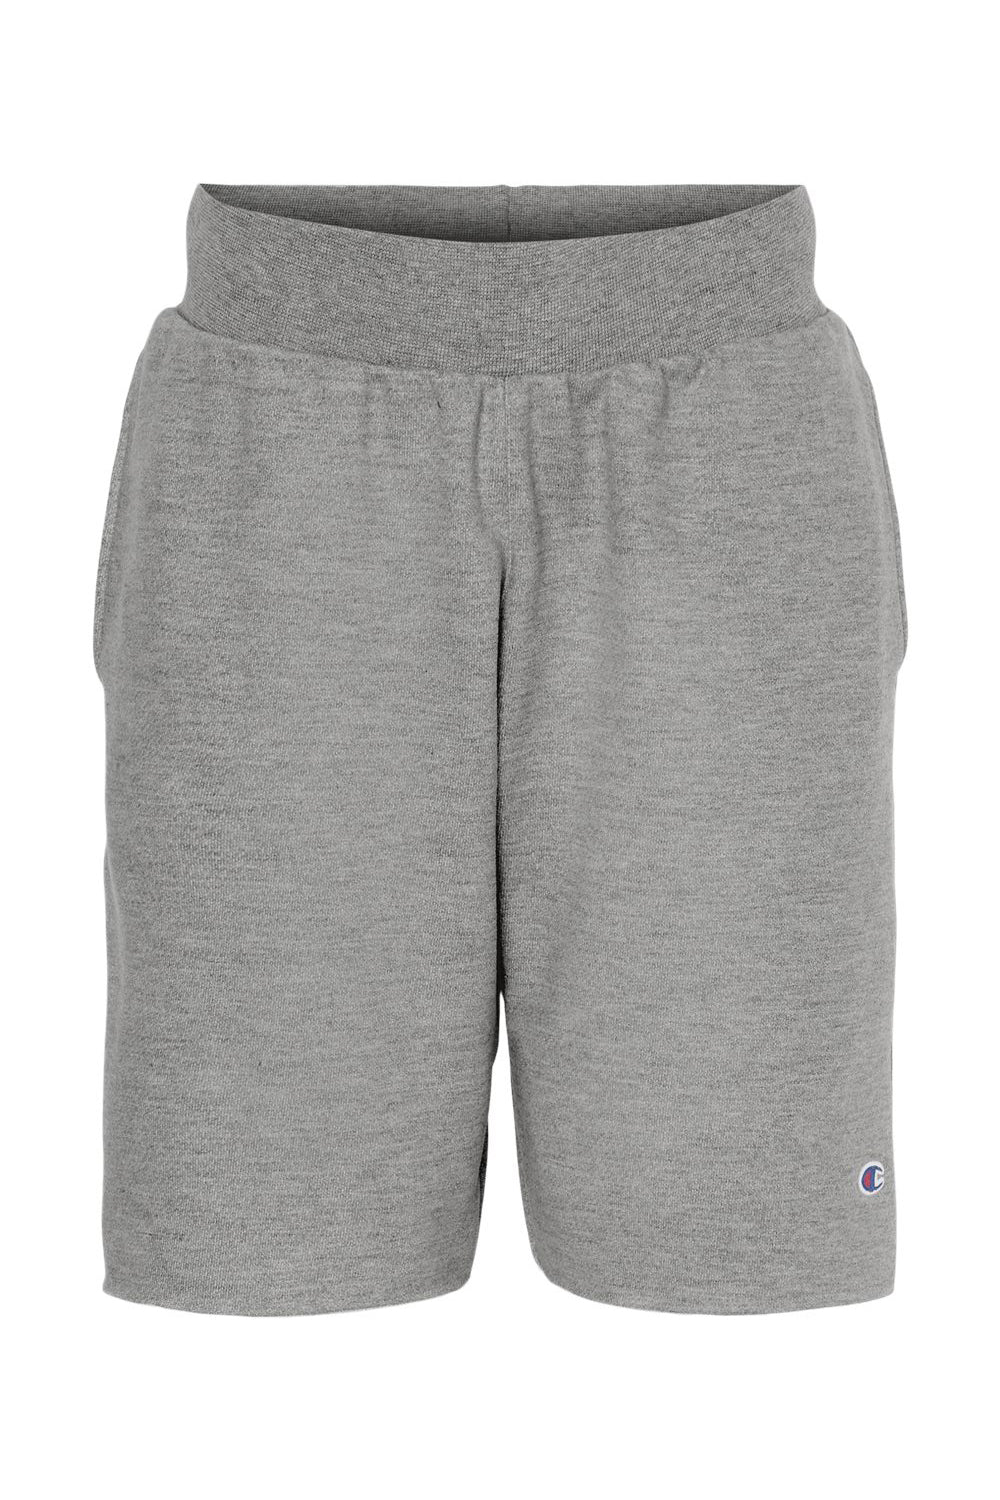 Champion RW26 Mens Reverse Weave Shorts w/ Pockets Oxford Grey Flat Front